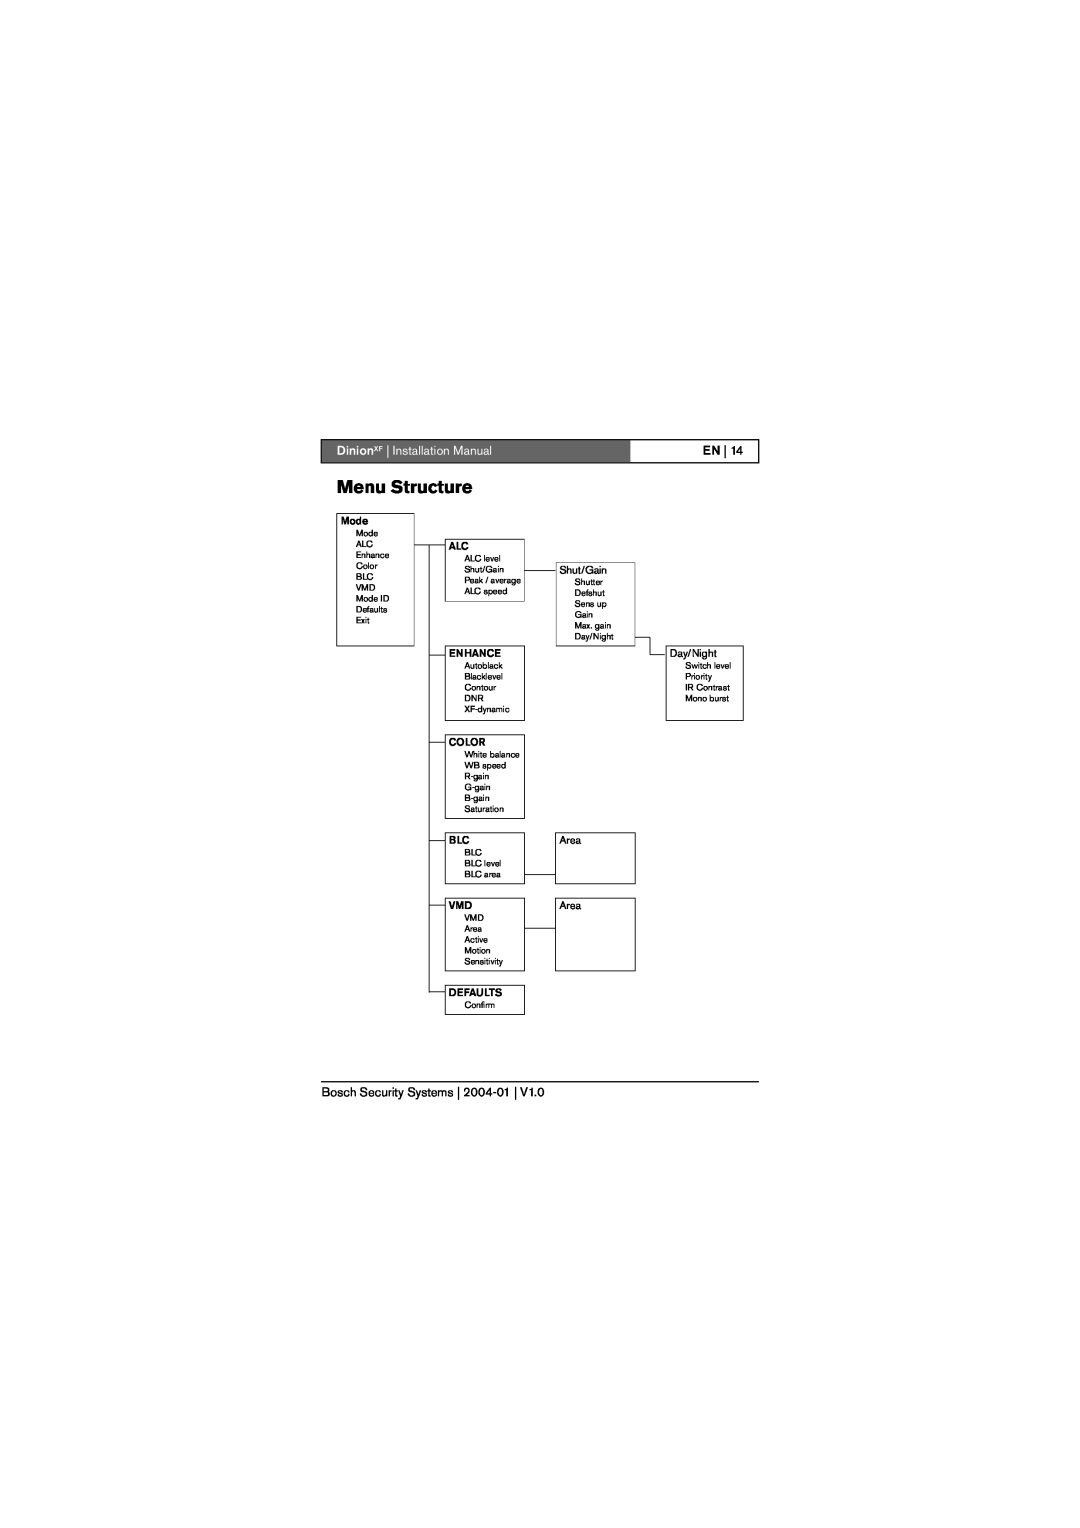 Bosch Appliances LTC 0495, LTC 0620 Menu Structure, DinionXF Installation Manual, En, Bosch Security Systems 